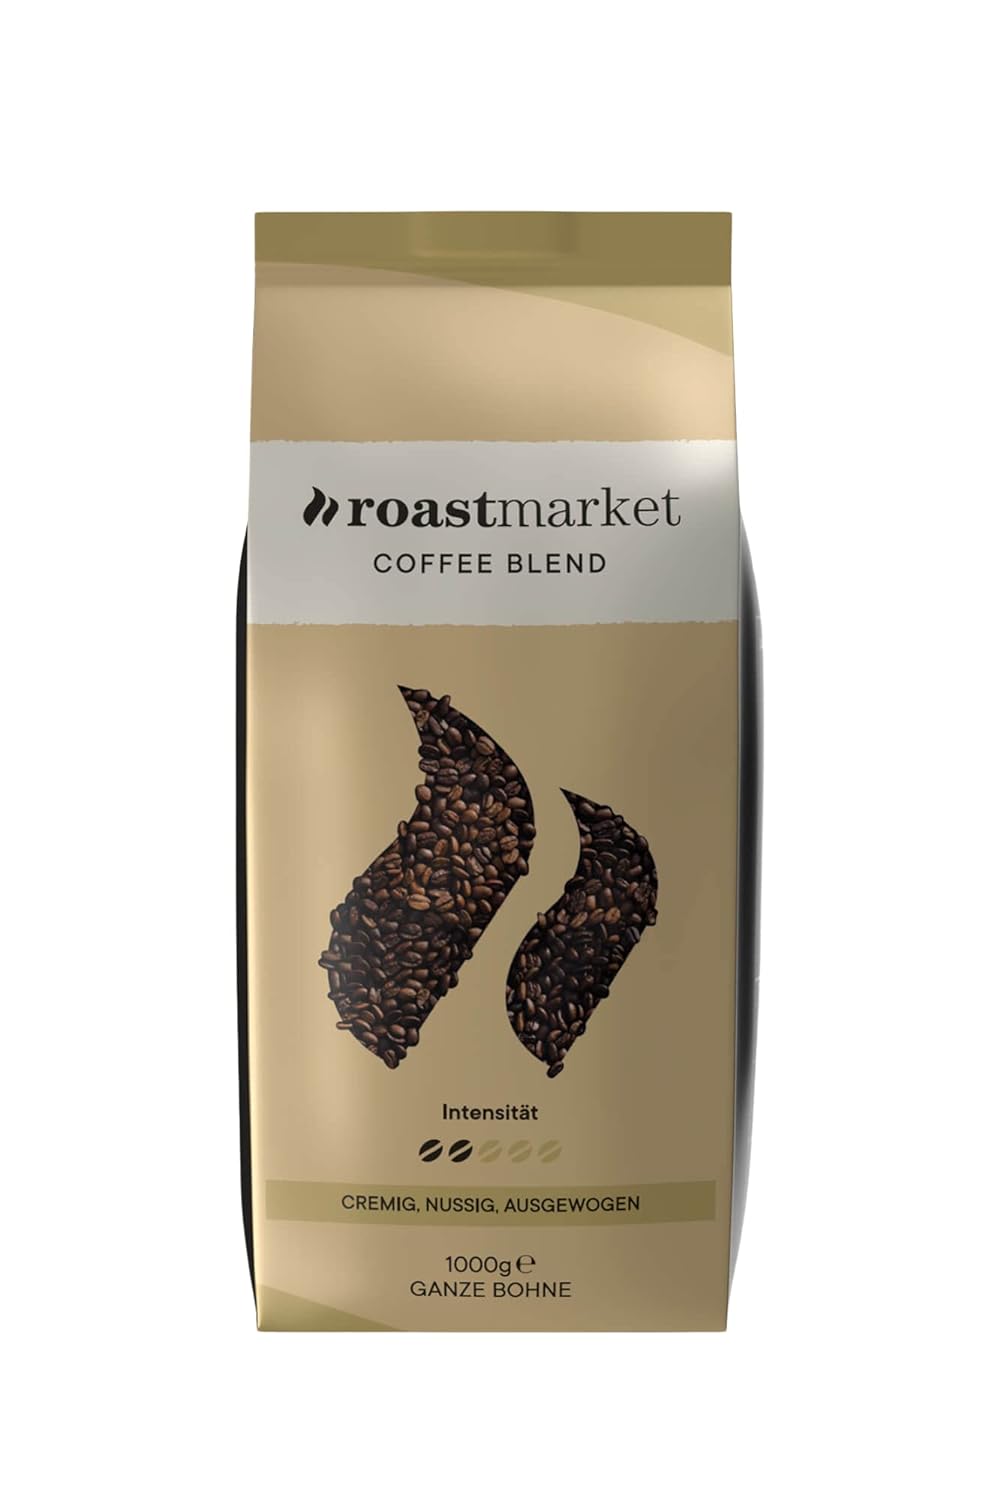 roastmarket Coffee Blend (1 kg) - Whole Coffee Beans - 100% Arabica - Ideal for Portafilters, Fully Automatic Coffee - Light Roast - Nutty, Sweet - Low Acid